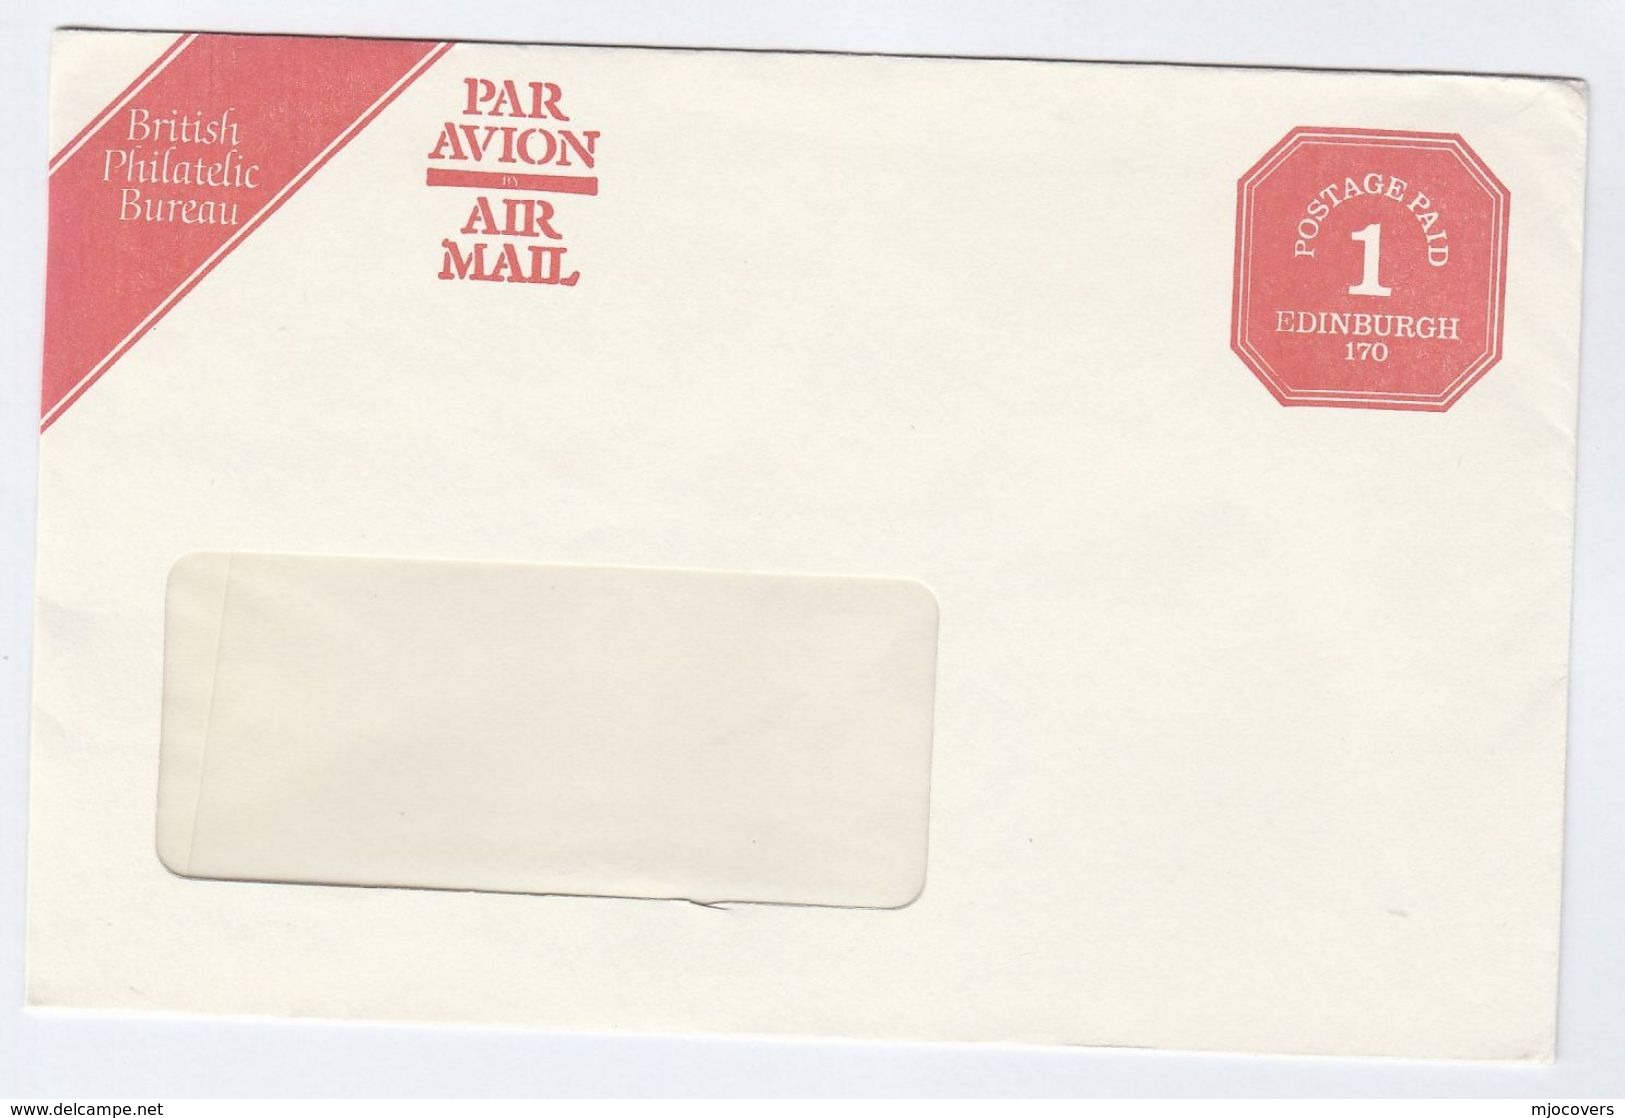 COVER Air Mail POSTAGE PAID 1 EDINBURGH 170 British Philatelic Bureau Postage Stationery GB - Cartas & Documentos